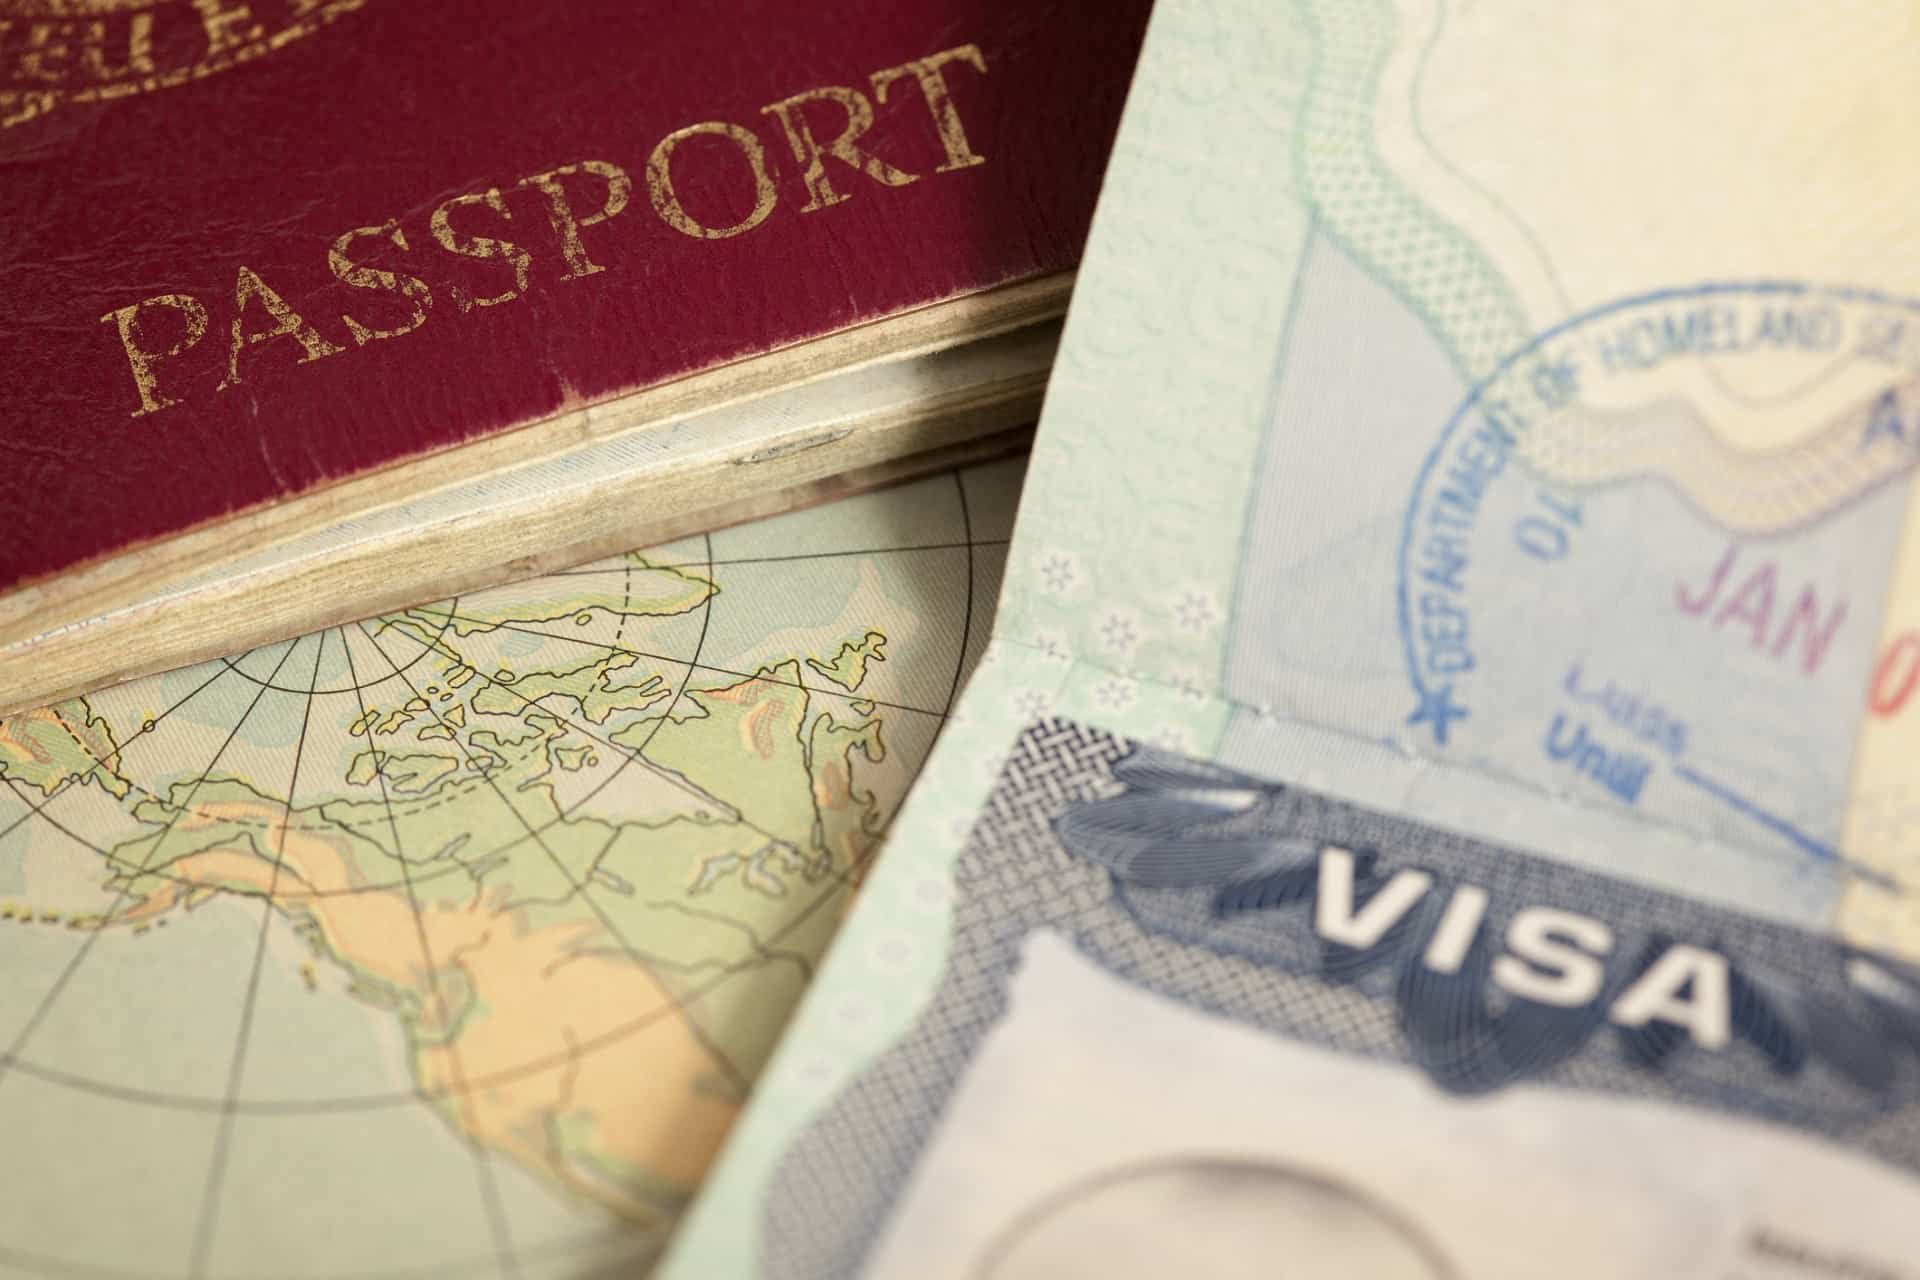 Work visas for international employees in the UK